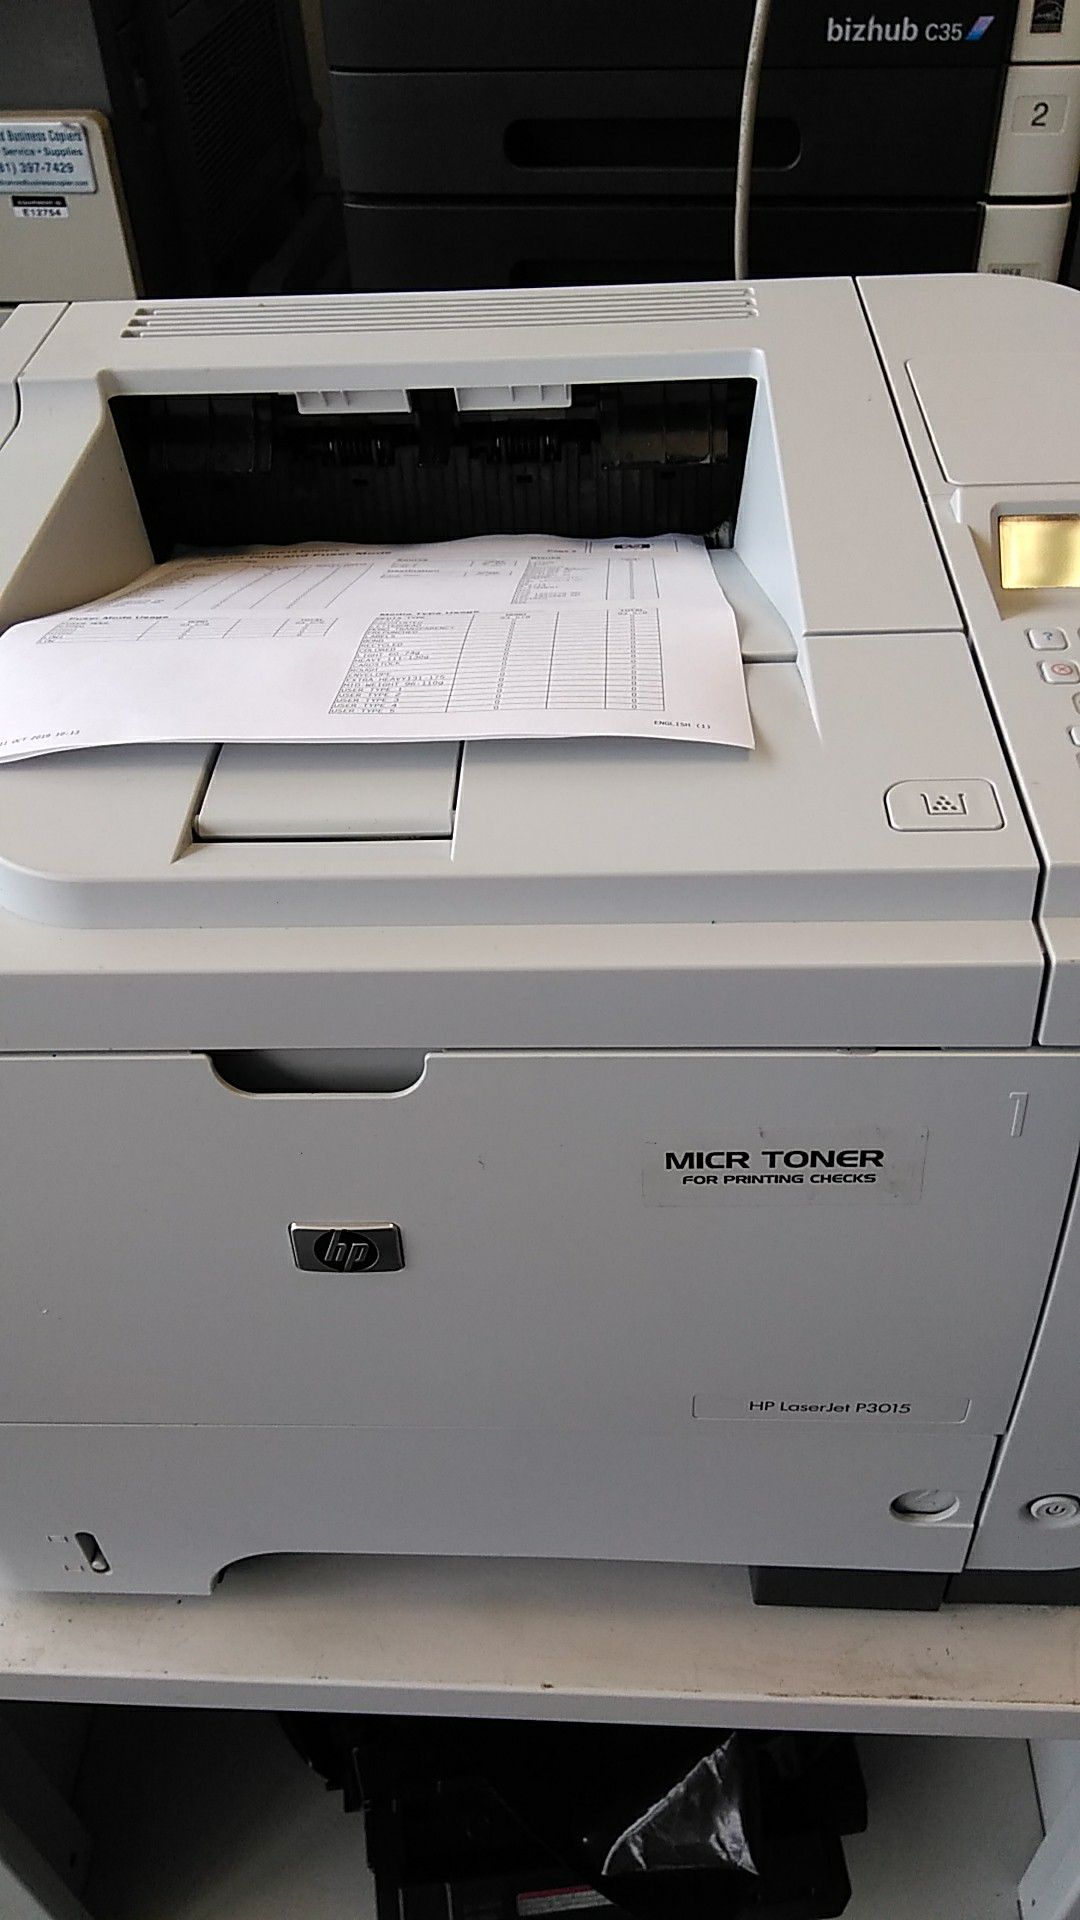 Printer Check printing with magentic toner